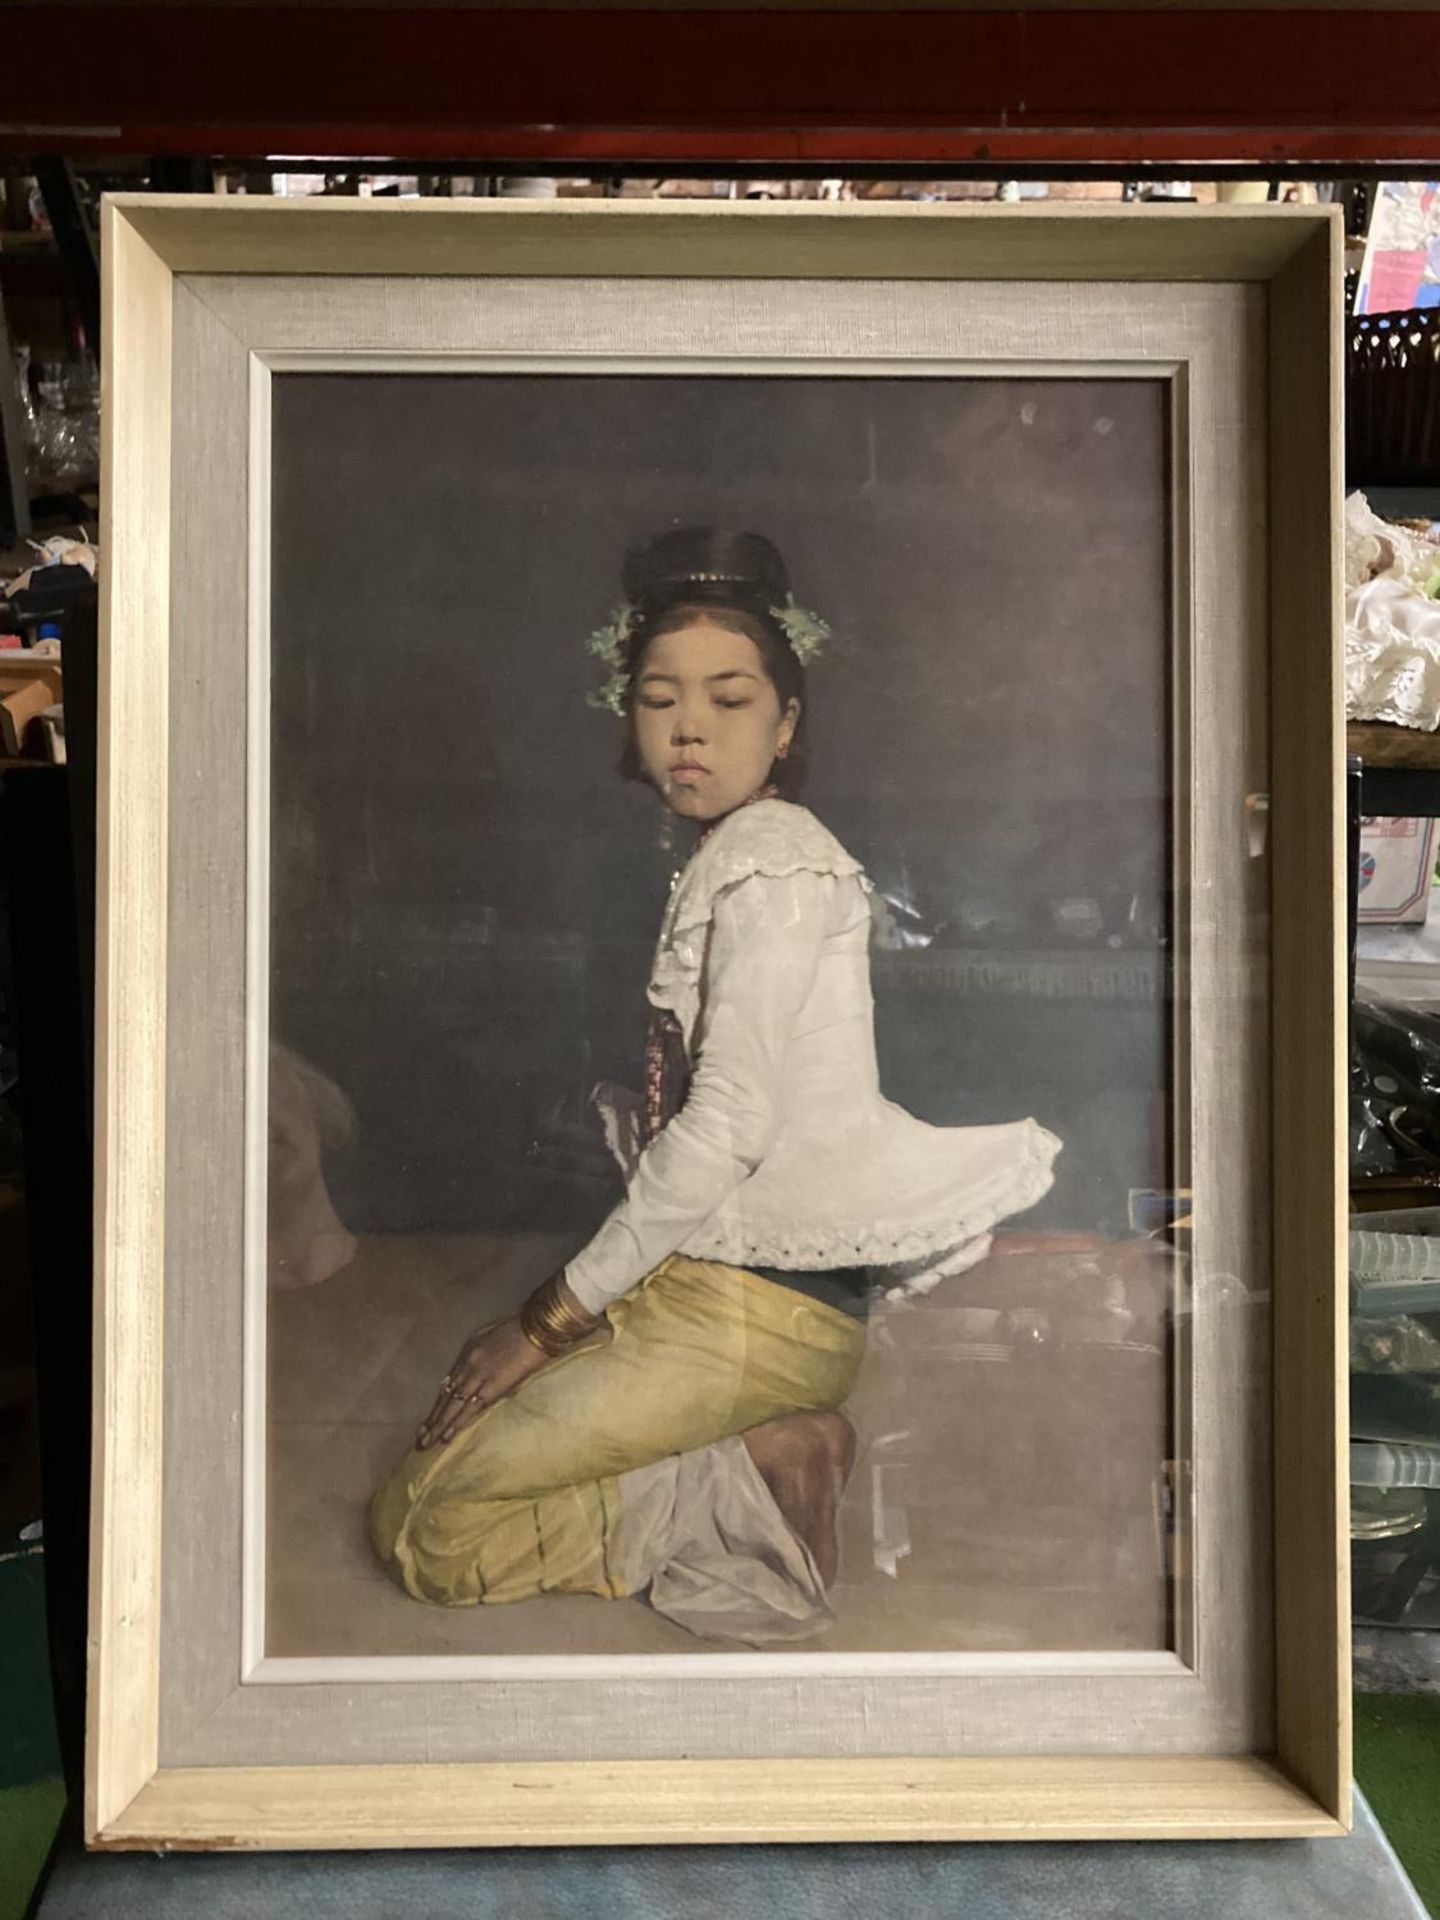 A FRAMED PRINT OF AN ASIAN GIRL BY SIR GERALD KELLY